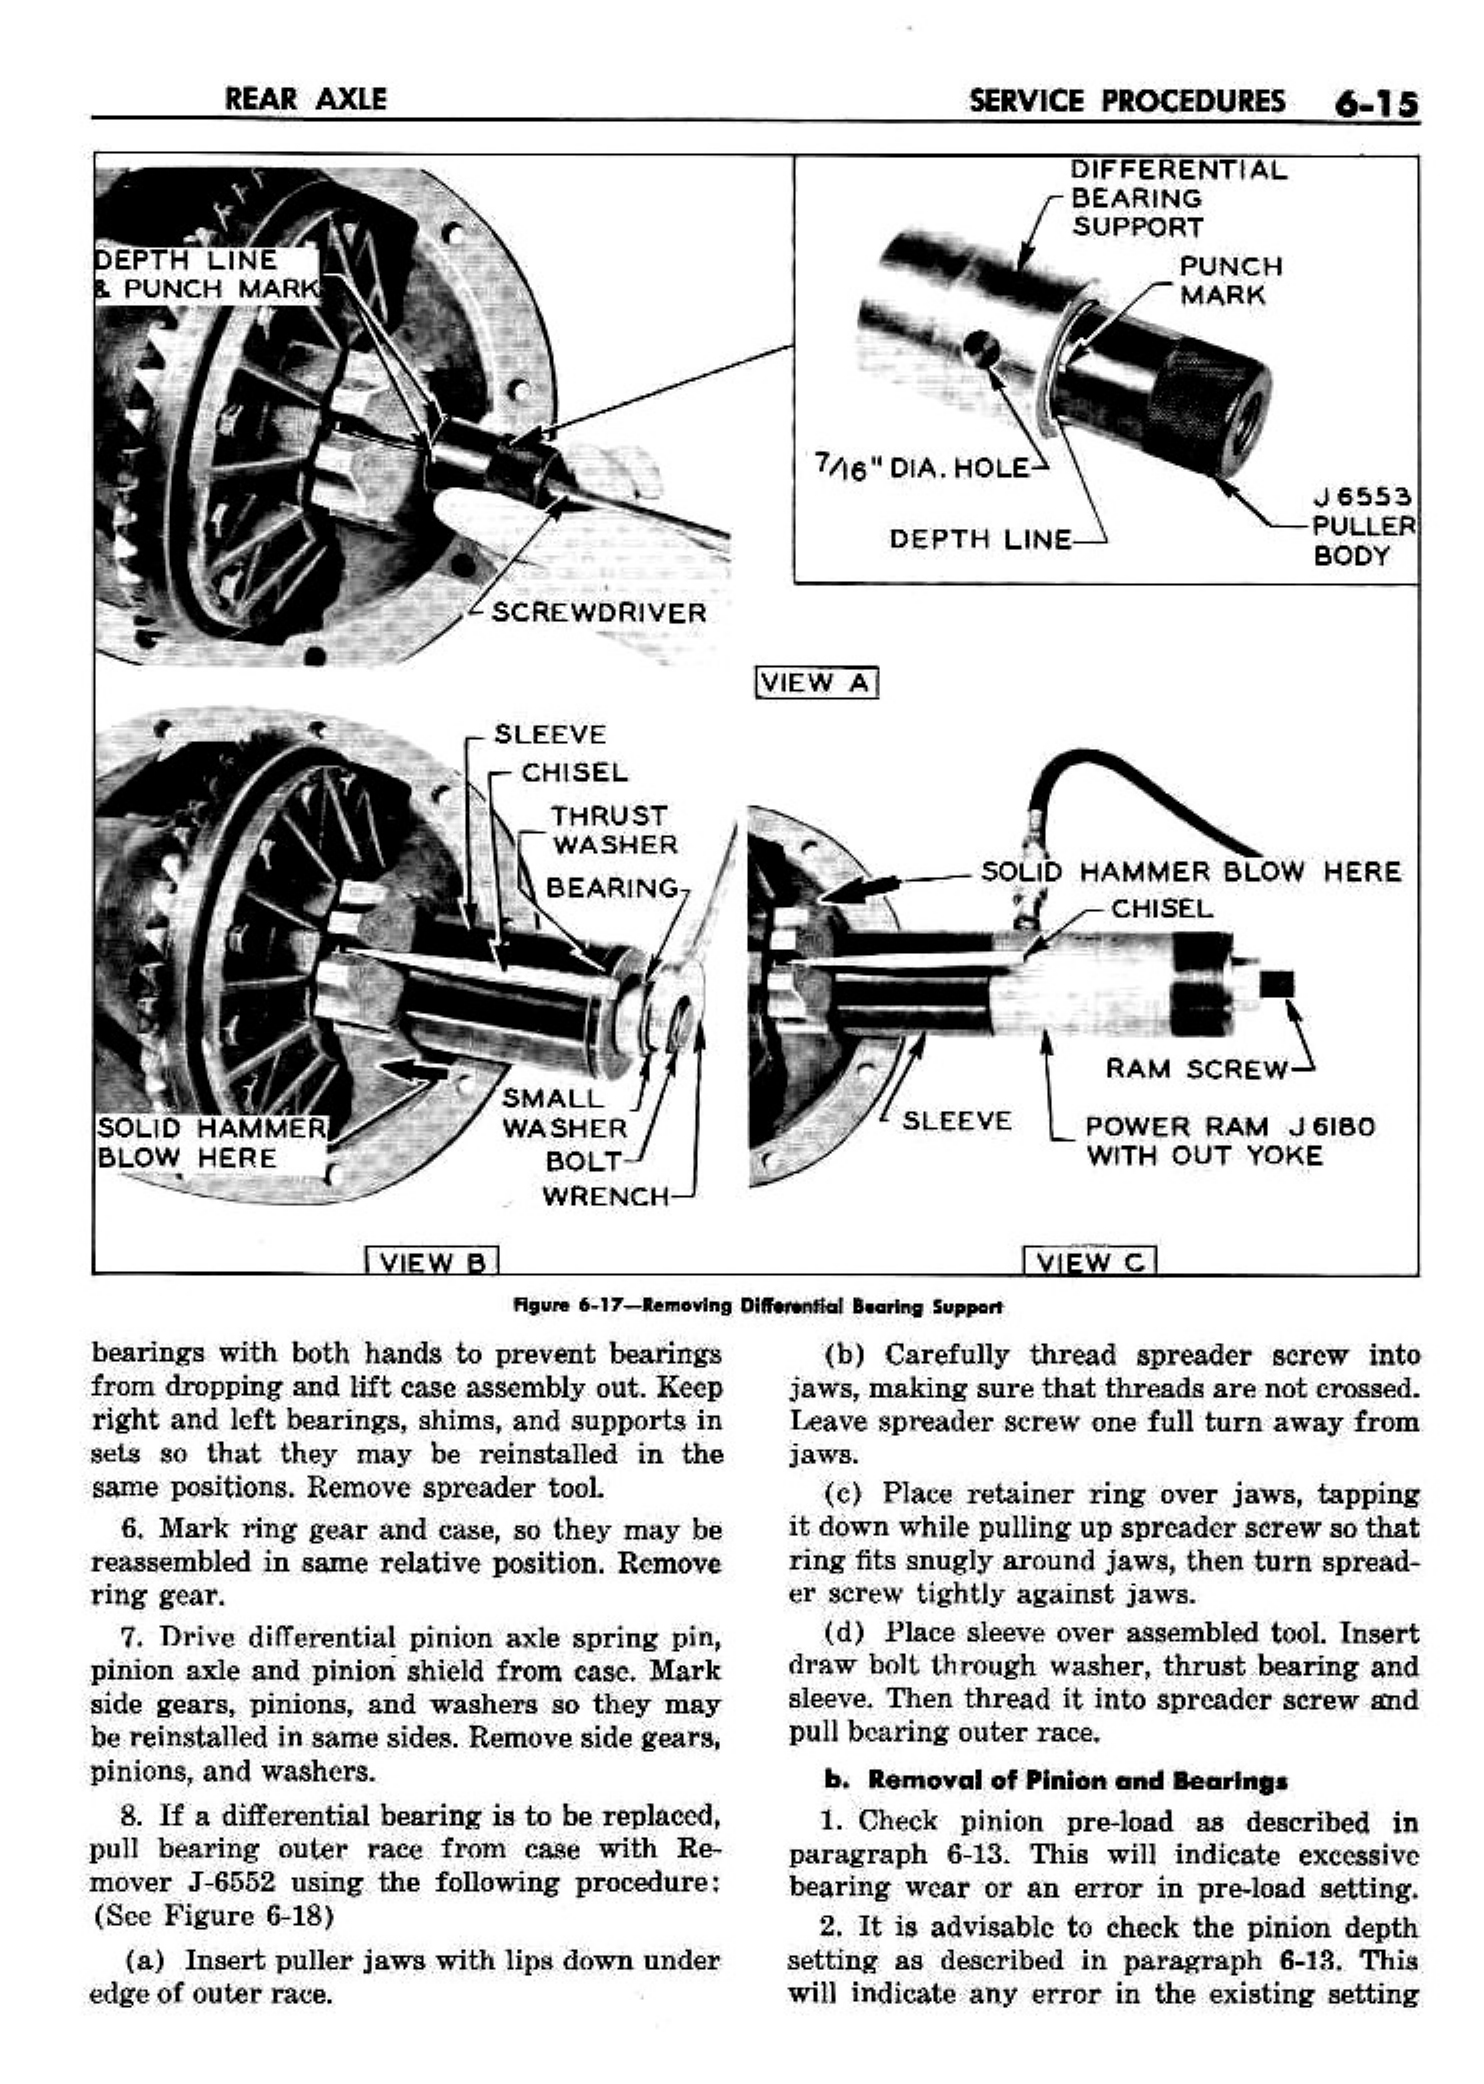 n_07 1958 Buick Shop Manual - Rear Axle_15.jpg